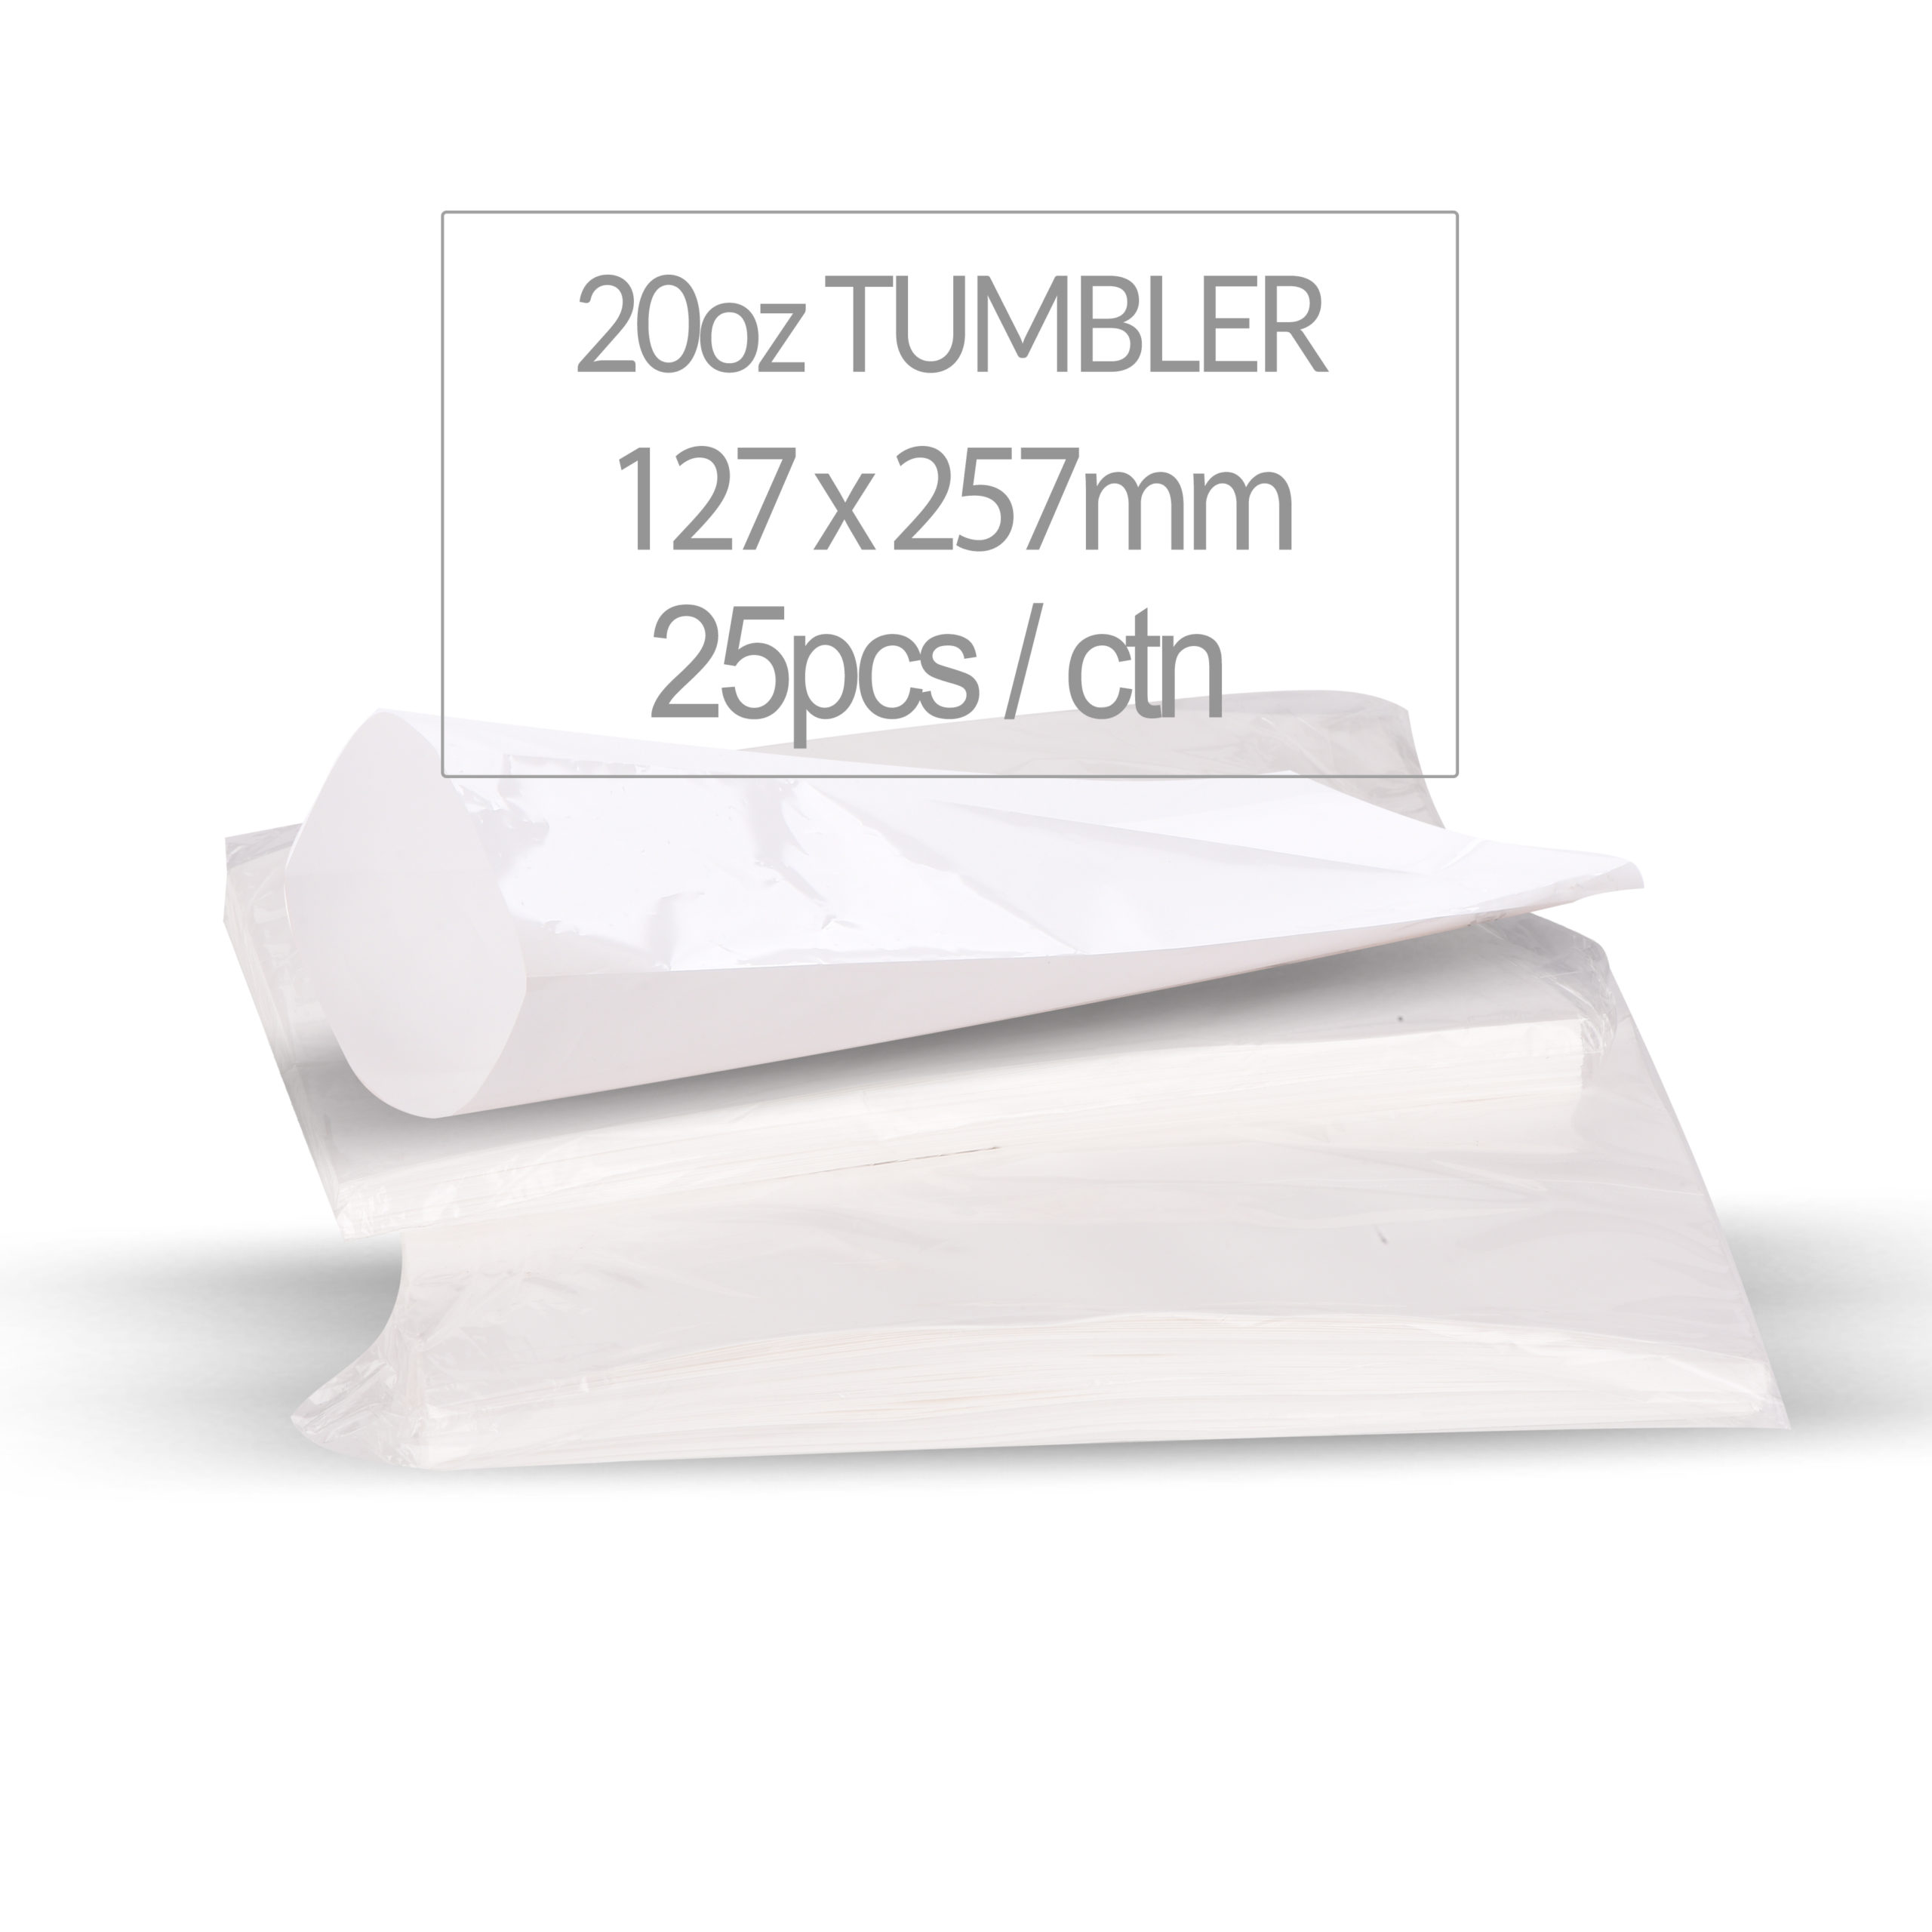 20oz Edgy Tumbler SAMPLE Pack, Flat Bottom